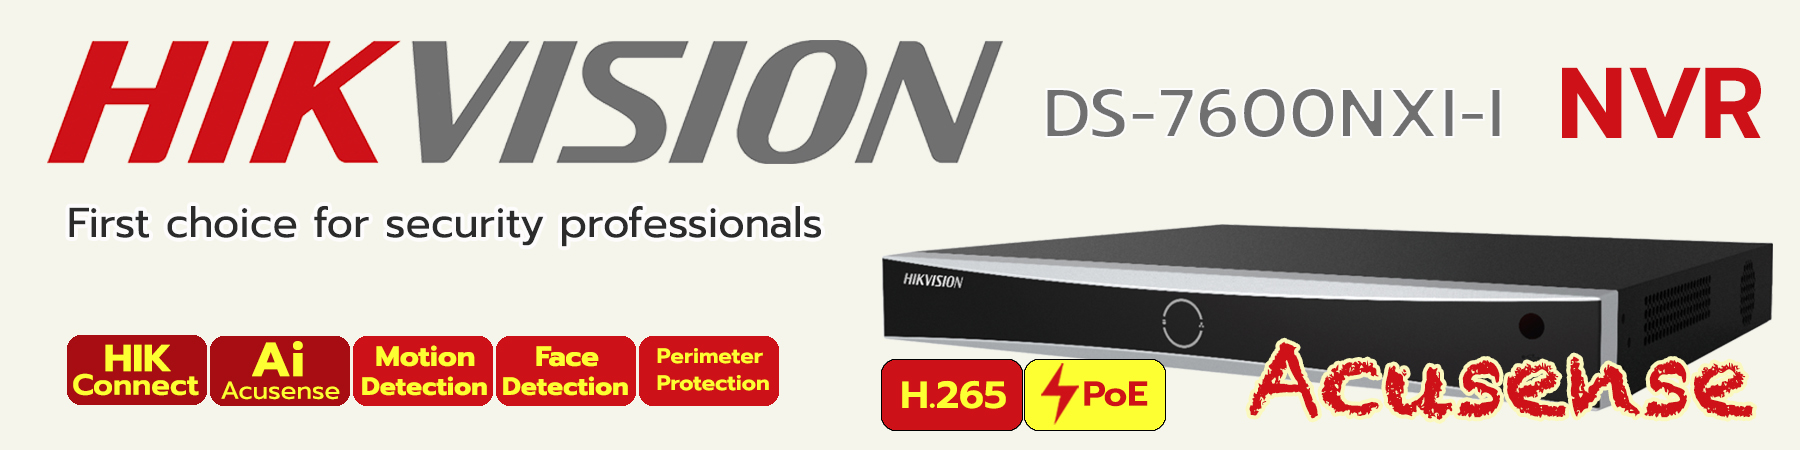 Hikvision Acusense NVR, Hikvision Acusense Network Video Recorder, DS-7608NXI-I2/S, DS-7608NXI-I2/8P/S, DS-7616NXI-I2/S, DS-7616NXI-I2/16P/S